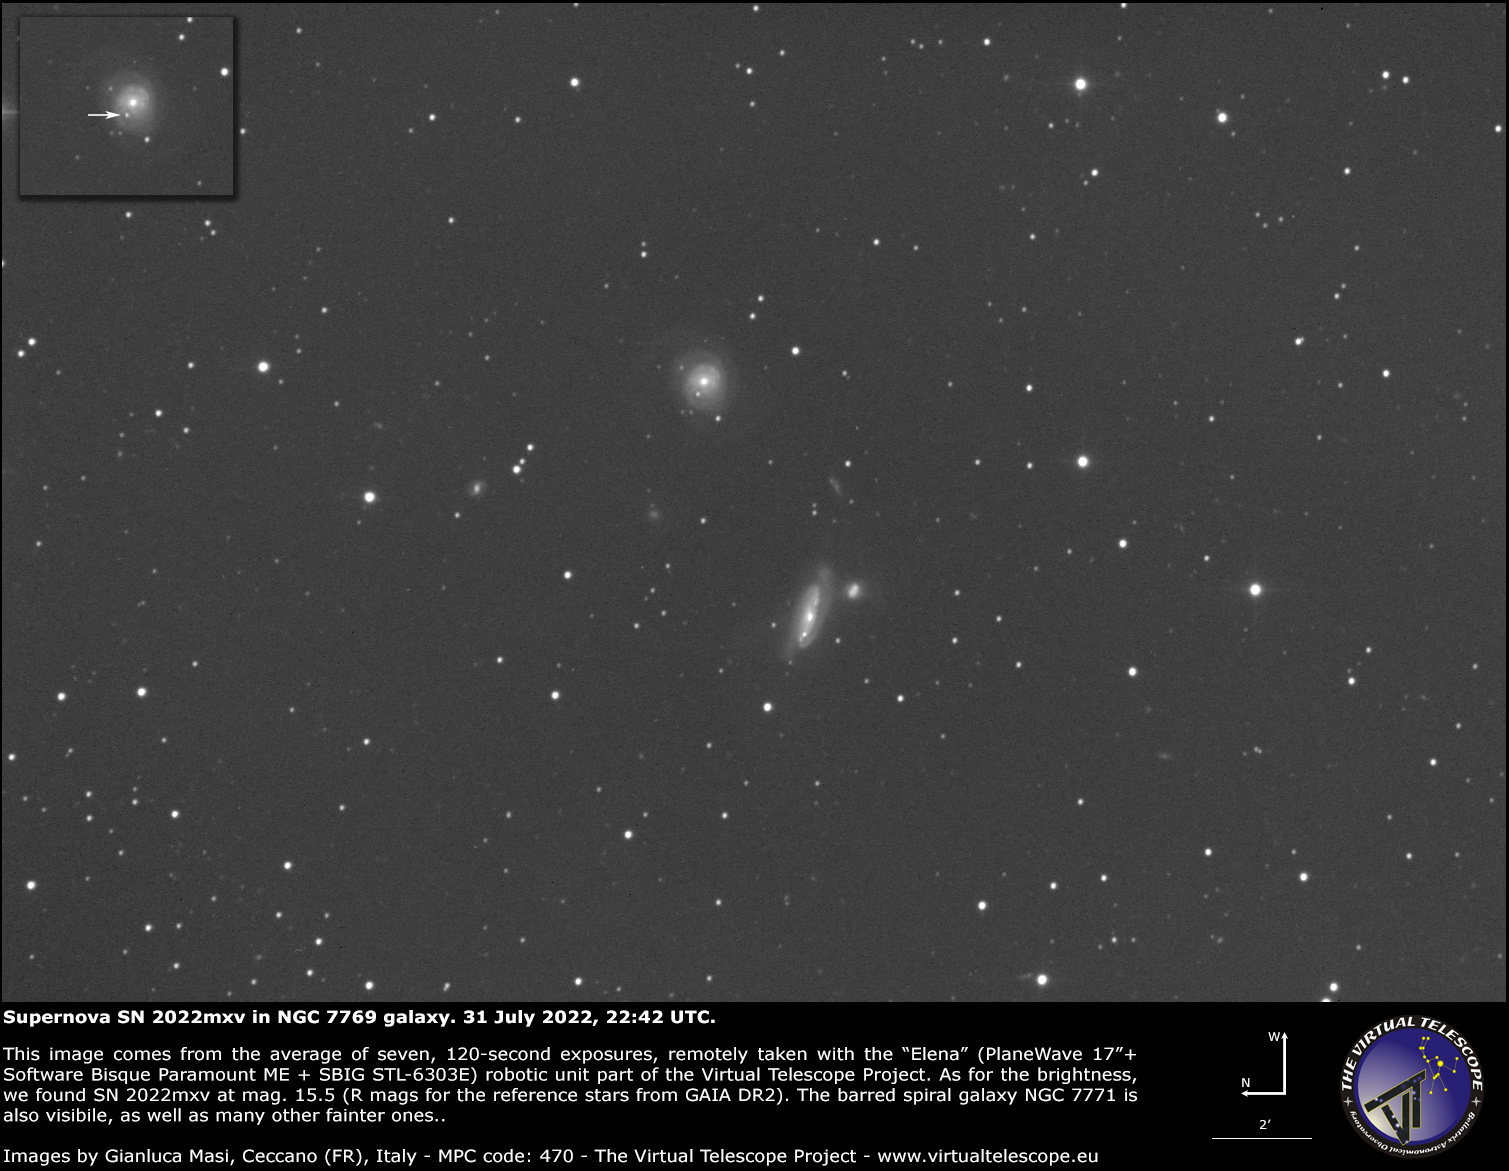 Supernova SN 2022mxv in NGC 7769 spiral galaxy: 31 July 2022.